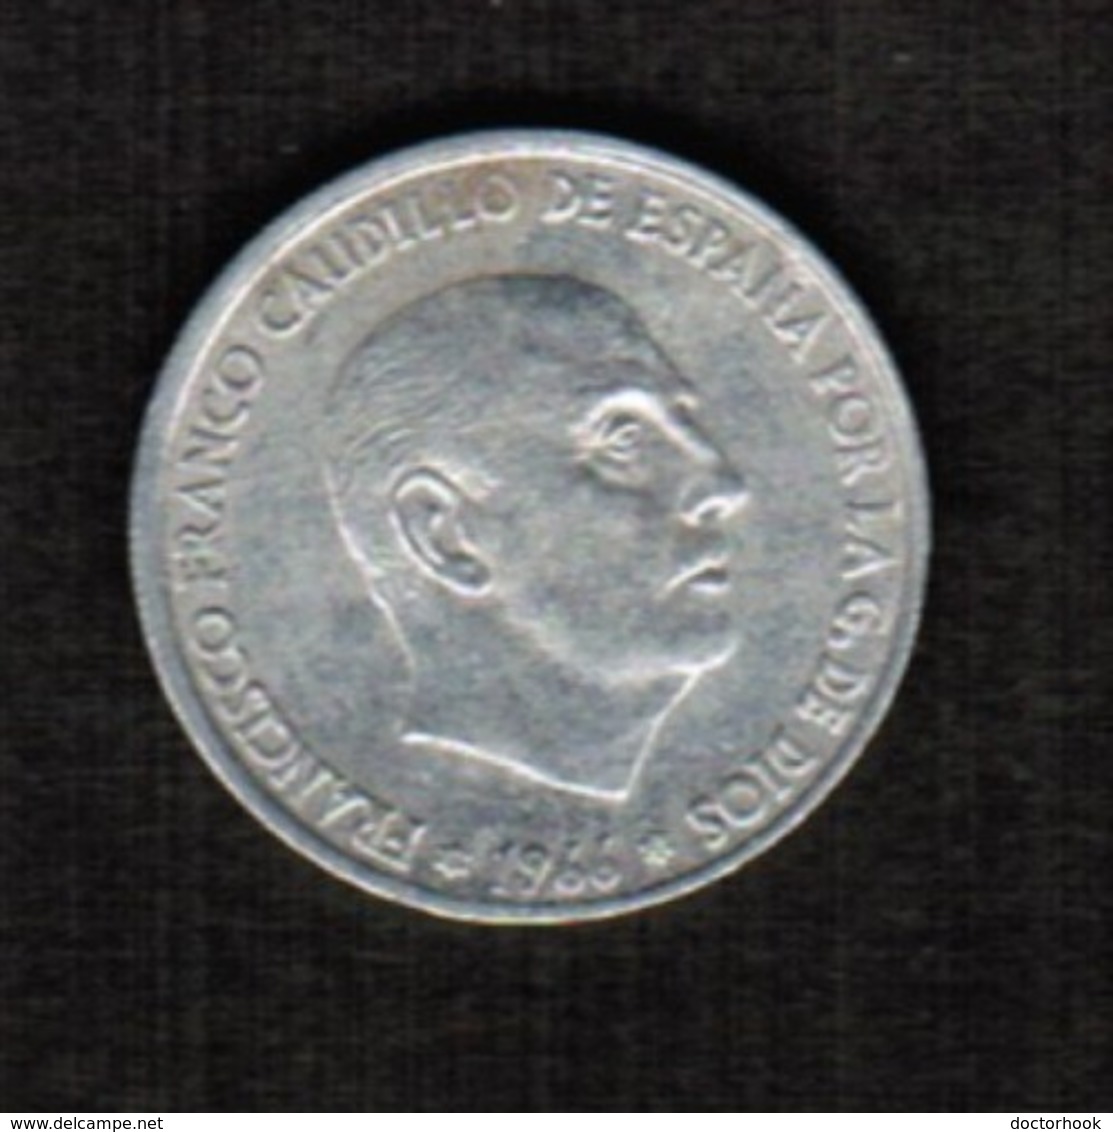 SPAIN  50 CENTIMOS 1966 (69) (KM # 795) #5298 - 50 Centiem